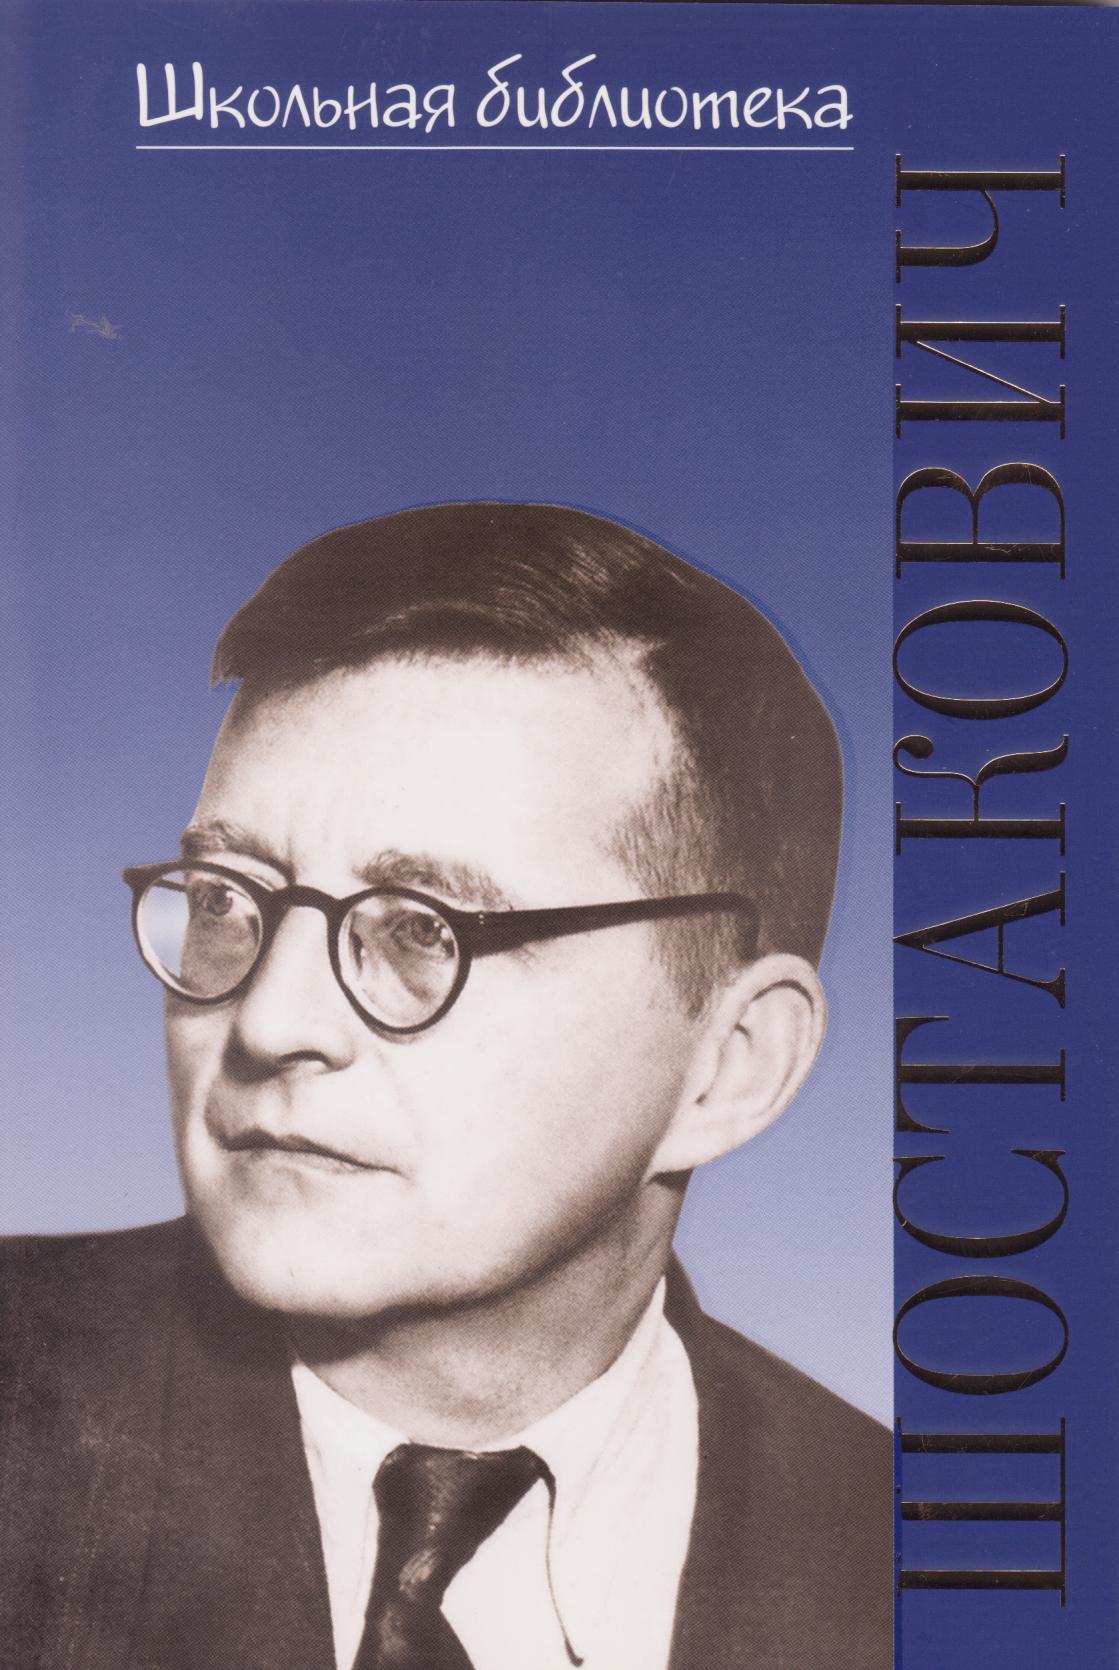 Дмитрий  Дмитриевич Шостакович